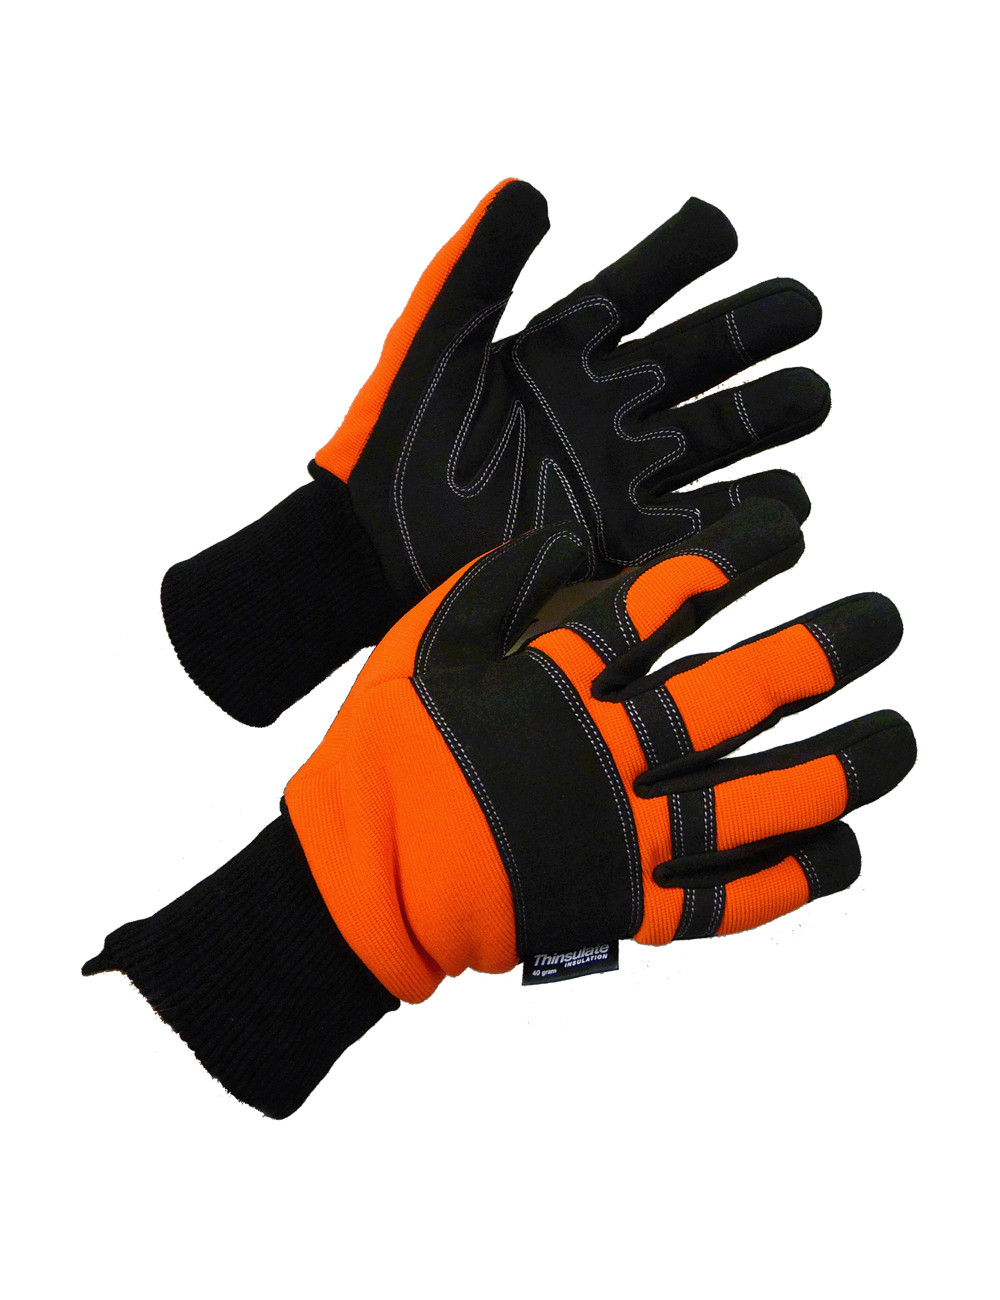 Coldstore tg1 pro coldstore gloves, Goldfreeze